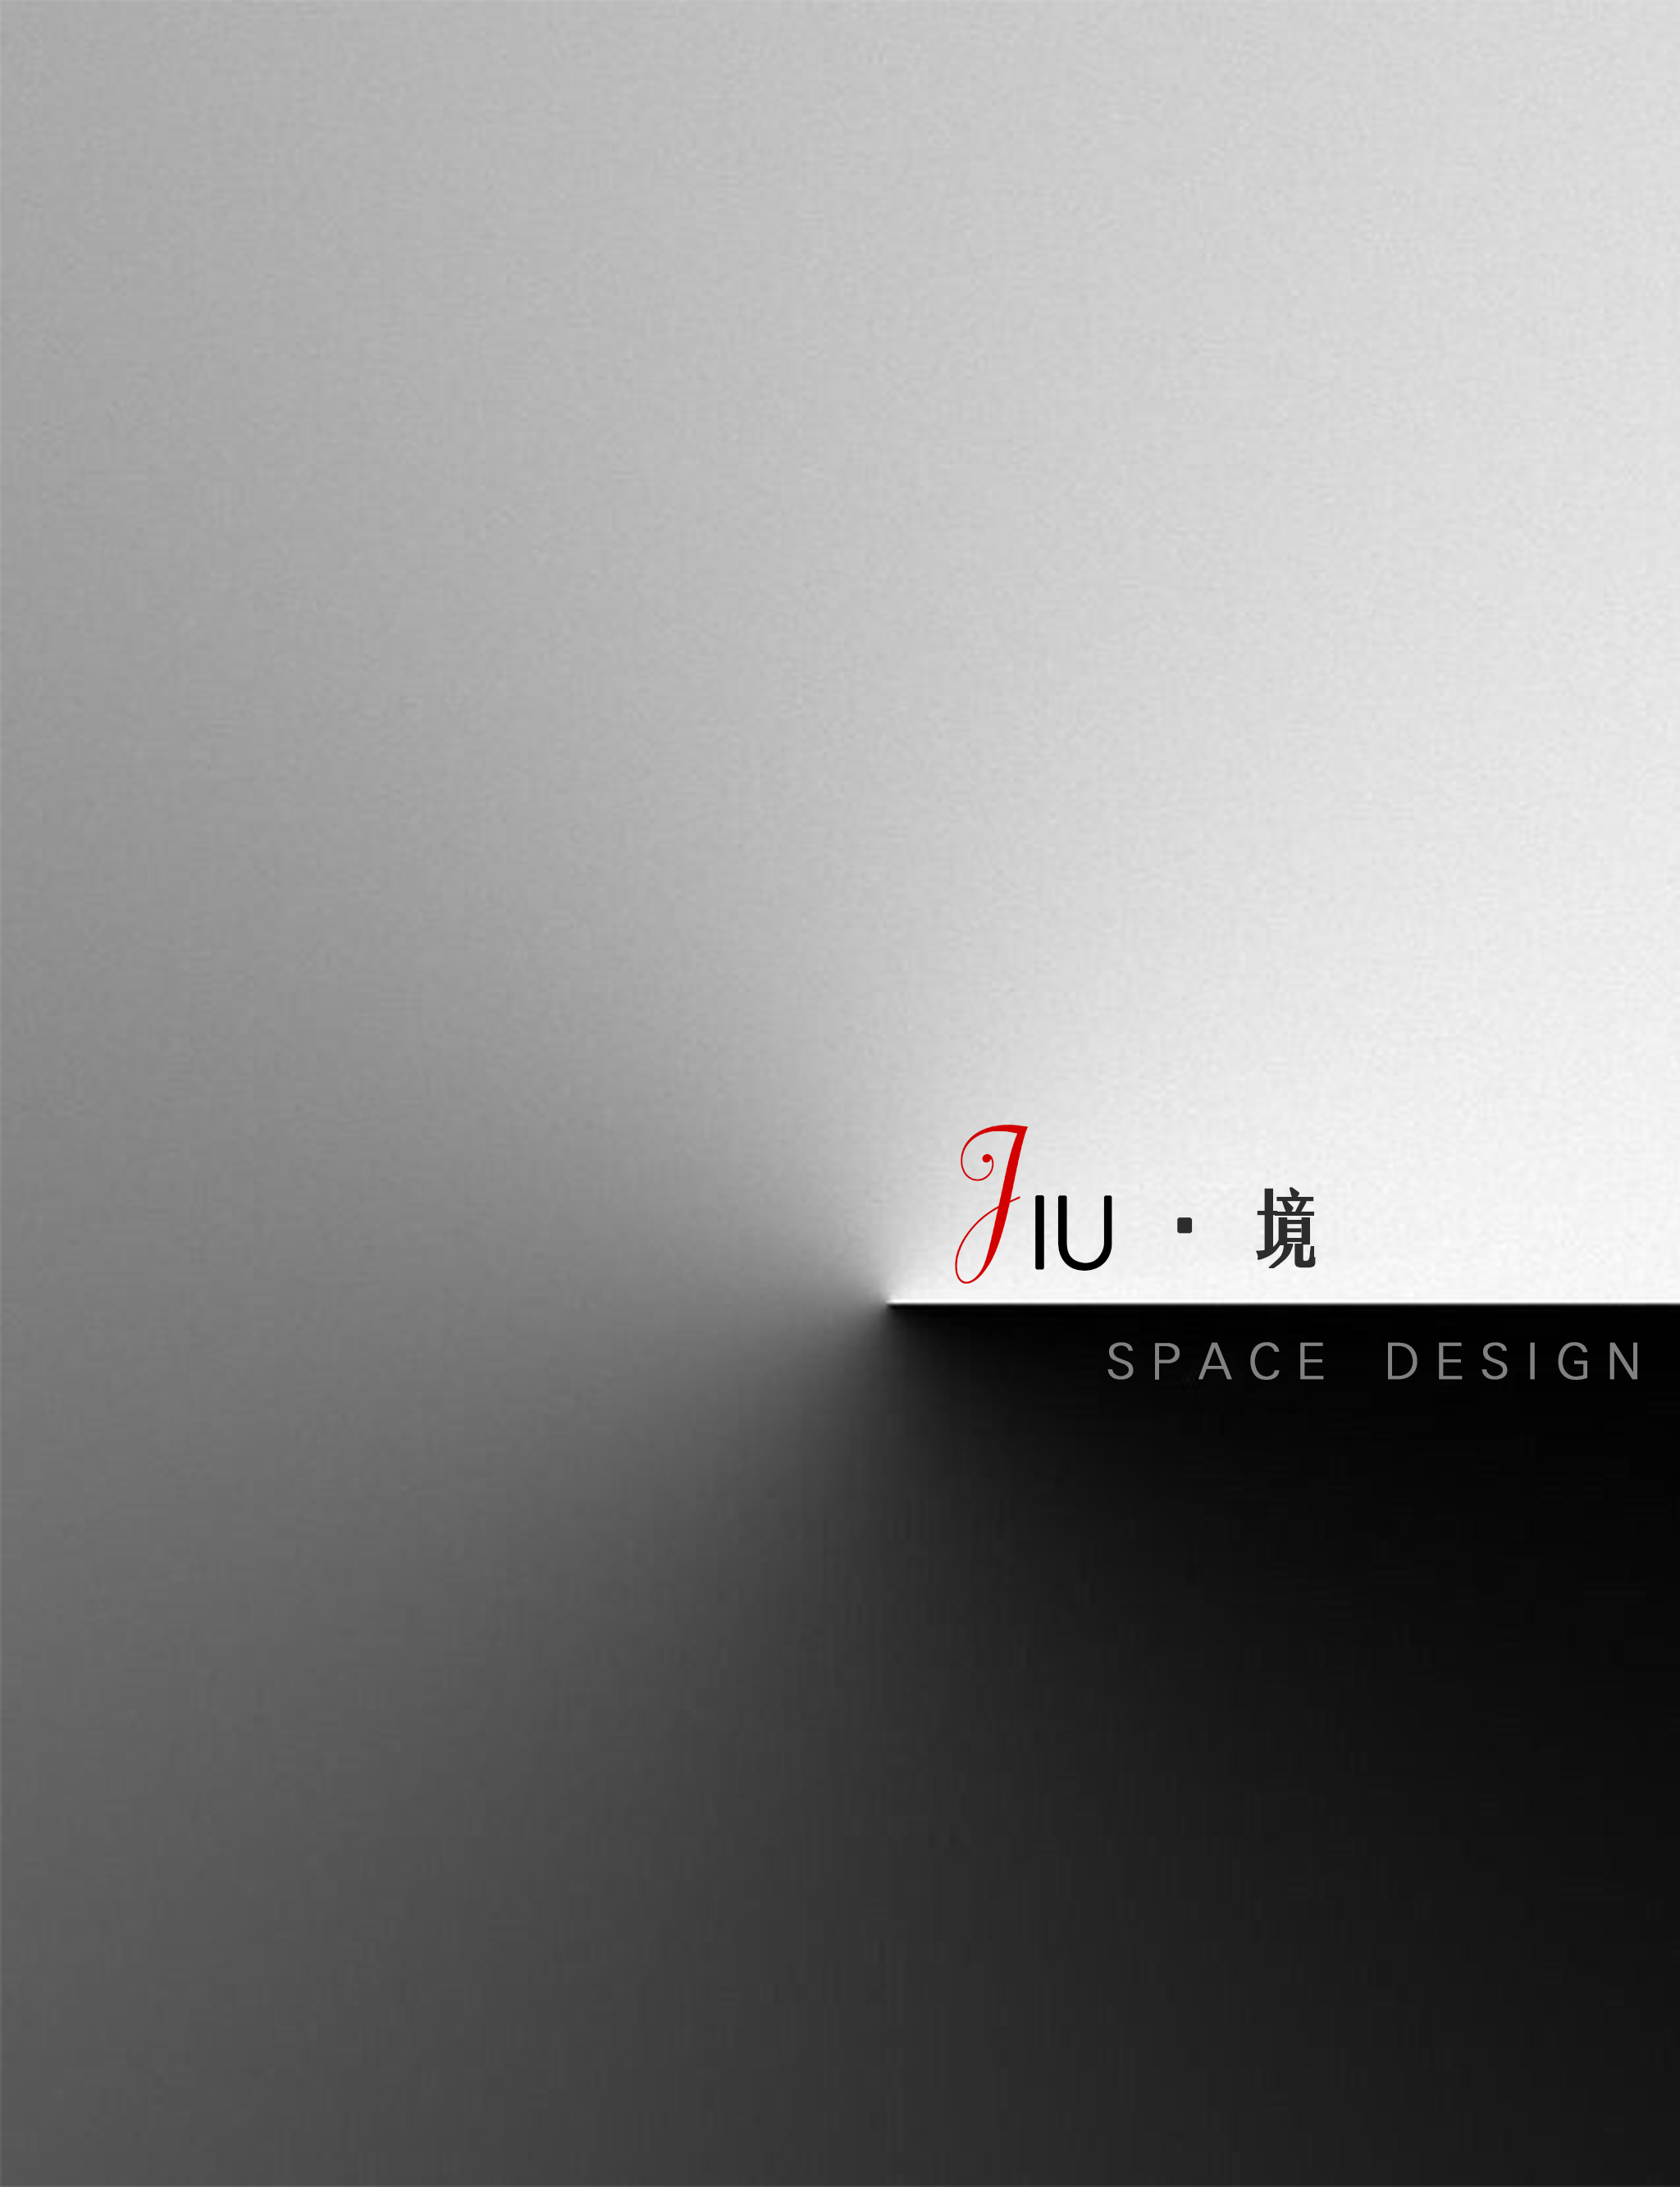 JIU · 境空间设计表现